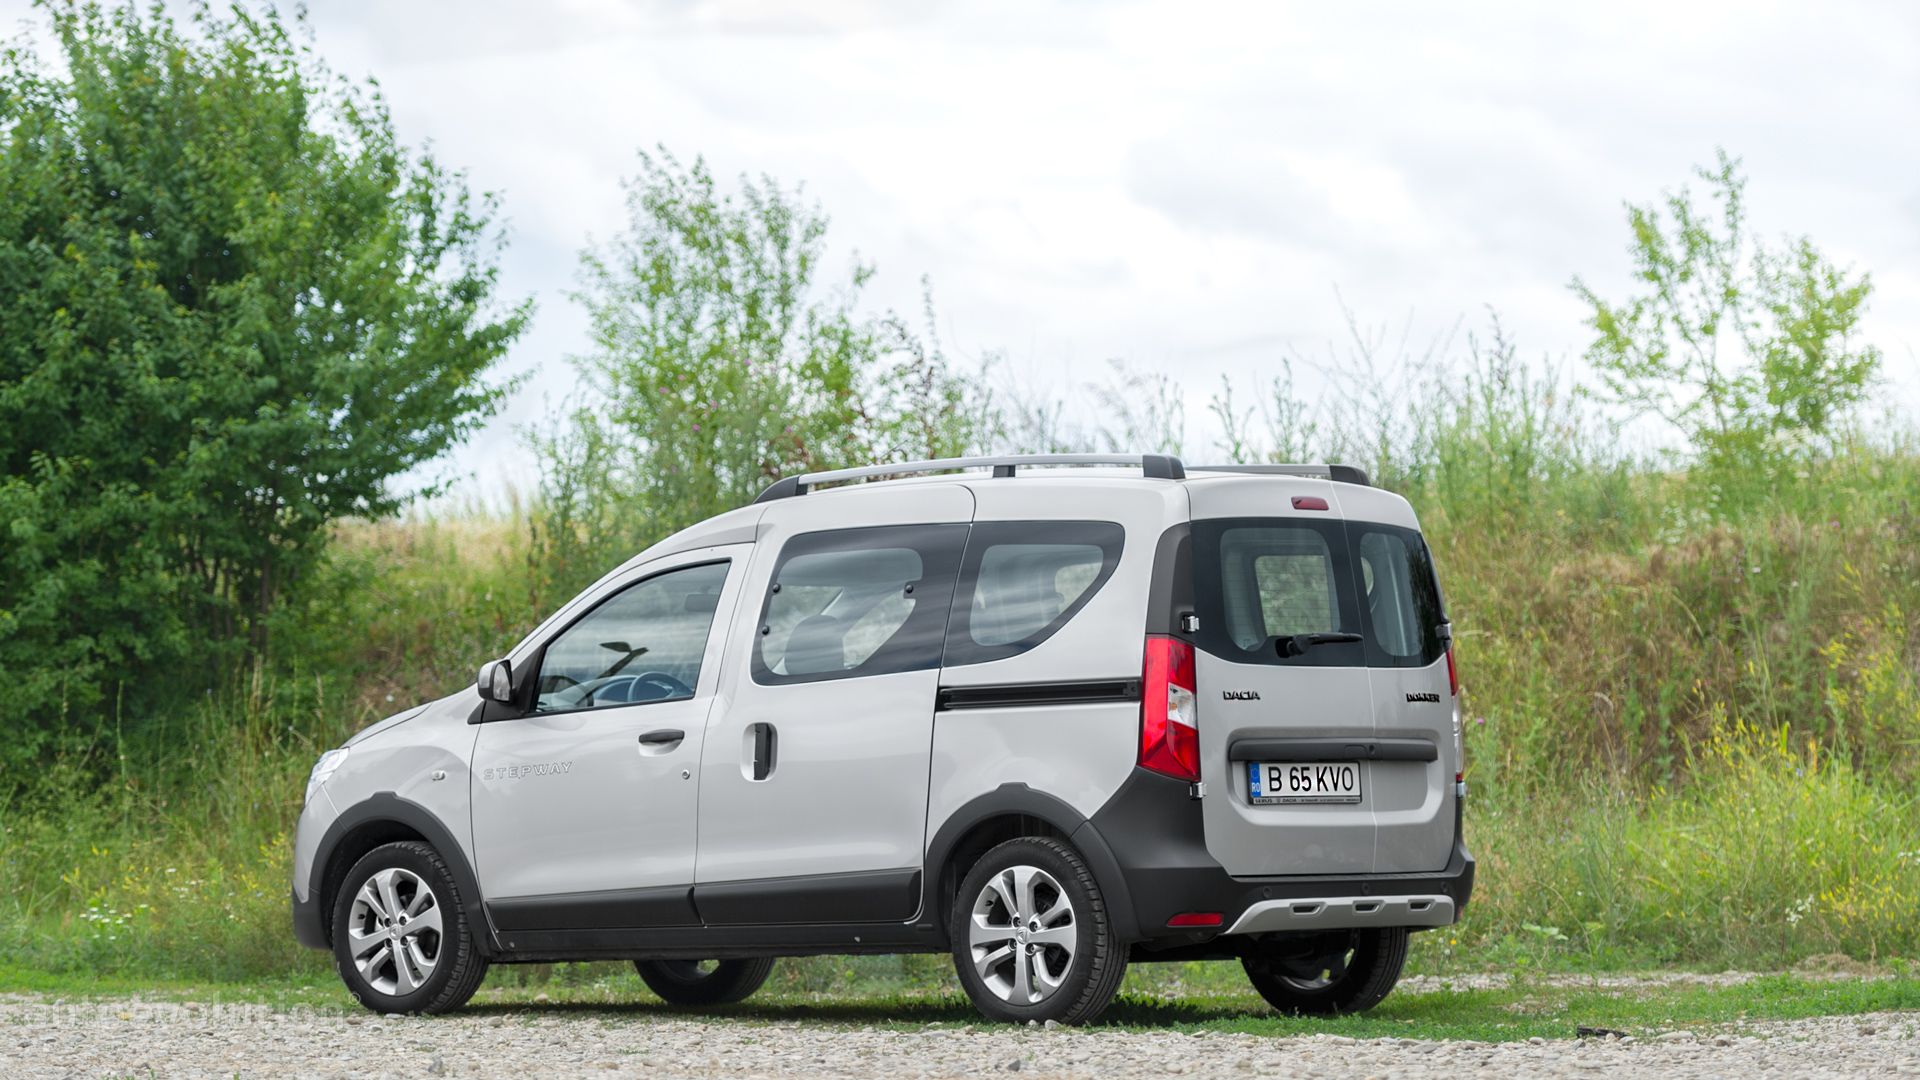 2015 Dacia Dokker Stepway Review - autoevolution